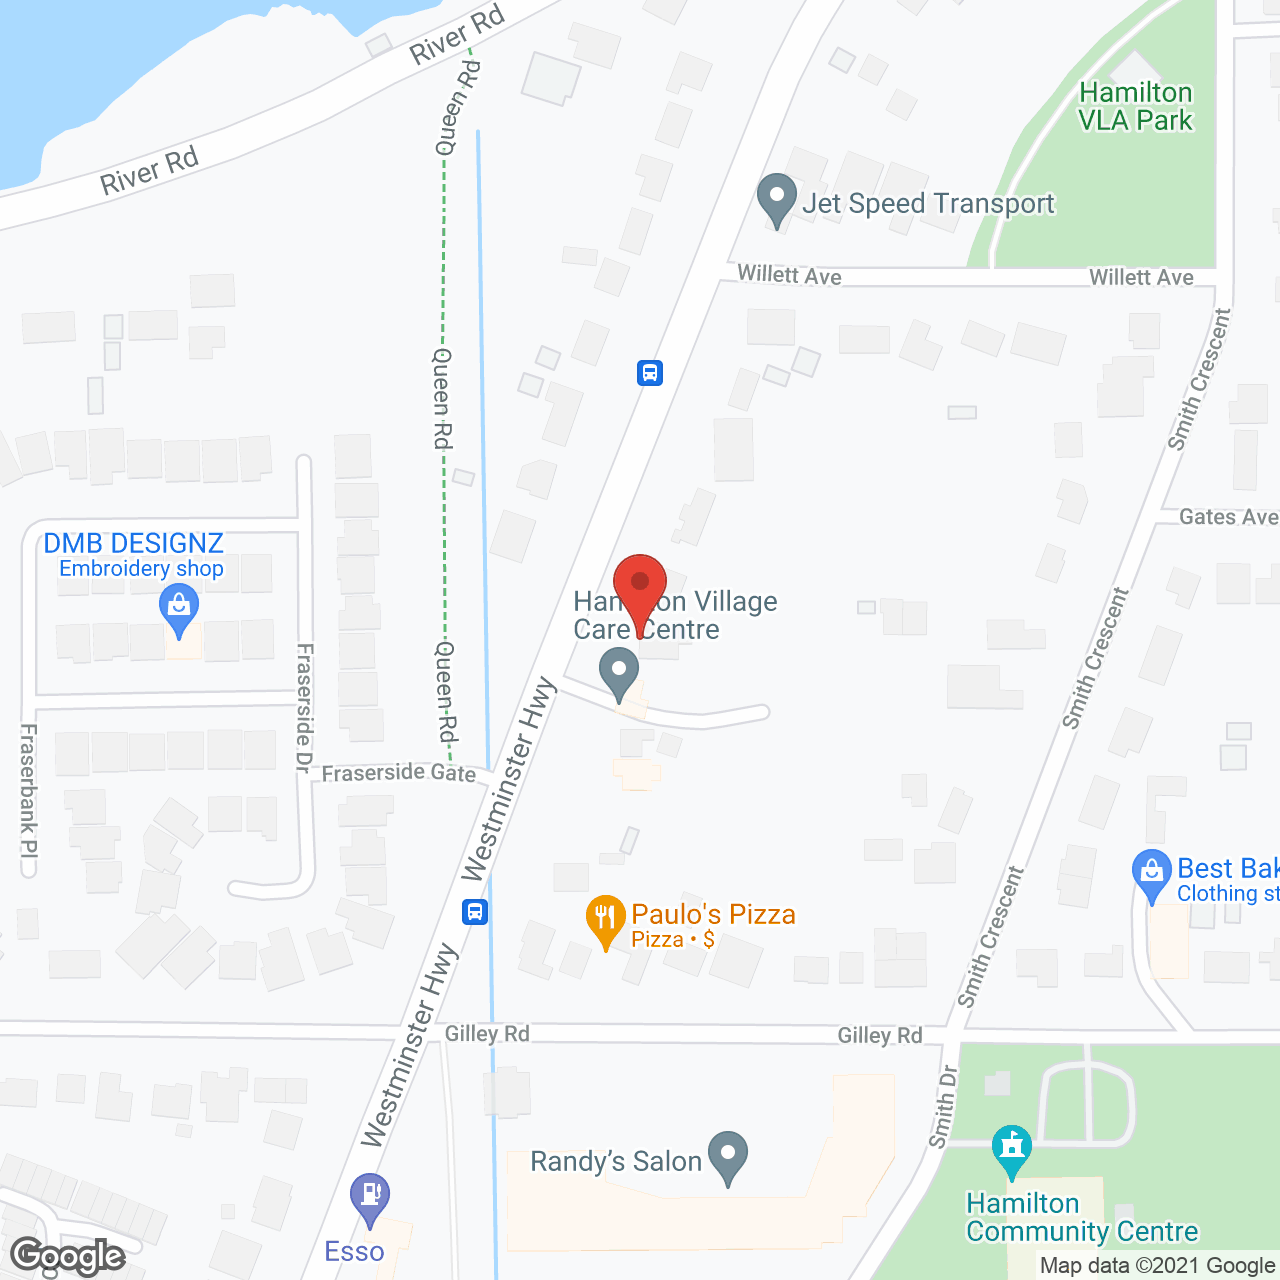 Hamilton High Street Residence in google map